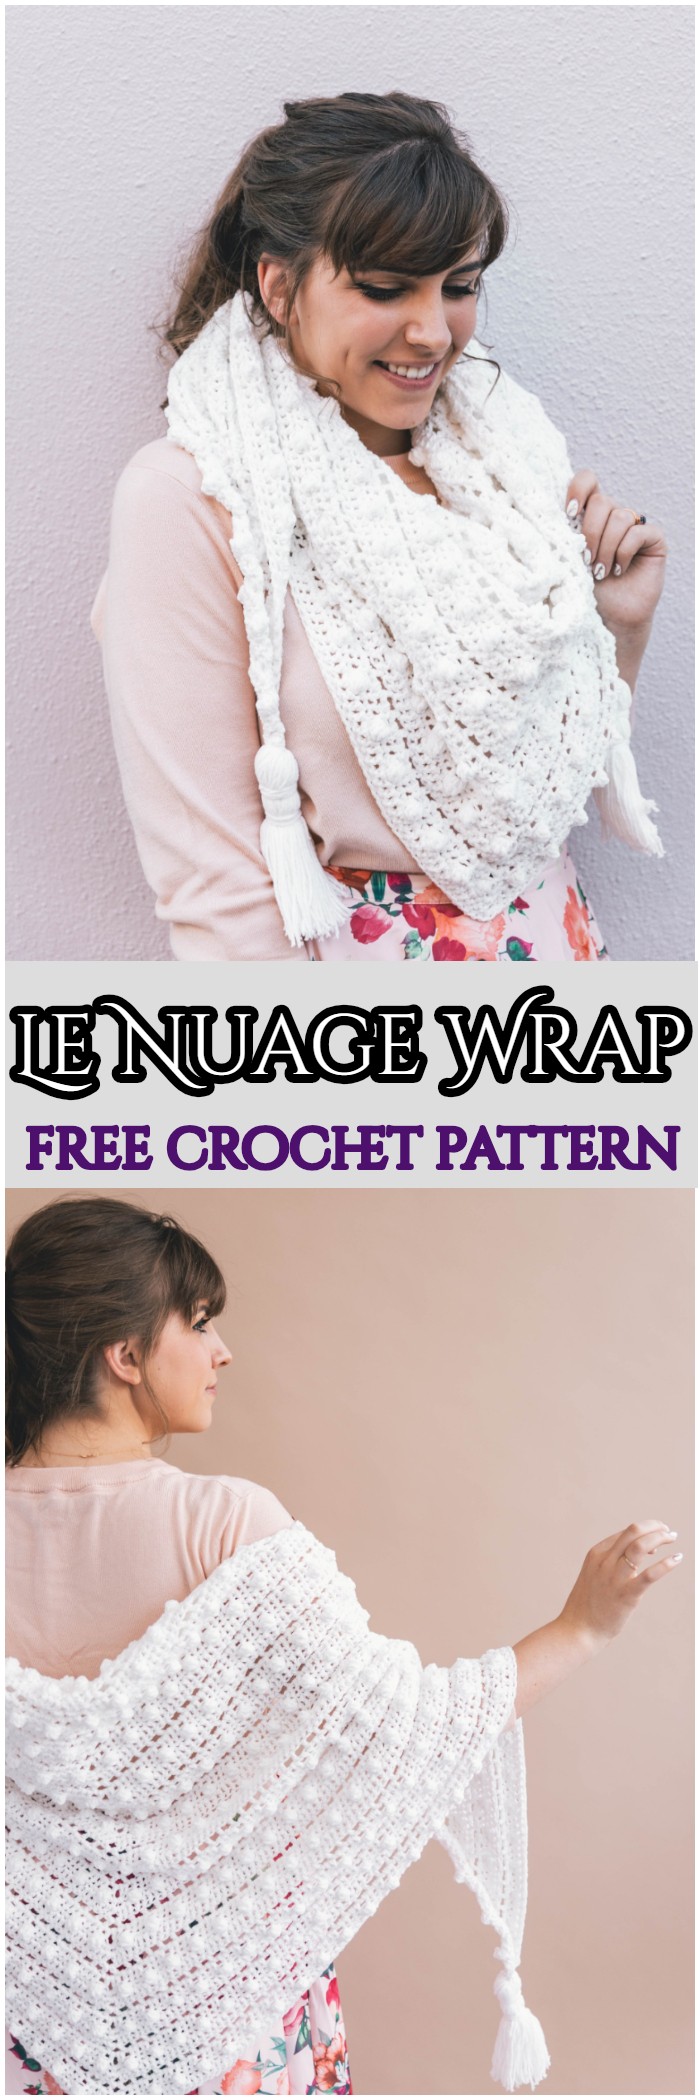 Crochet Le Nuage Wrap Shawl